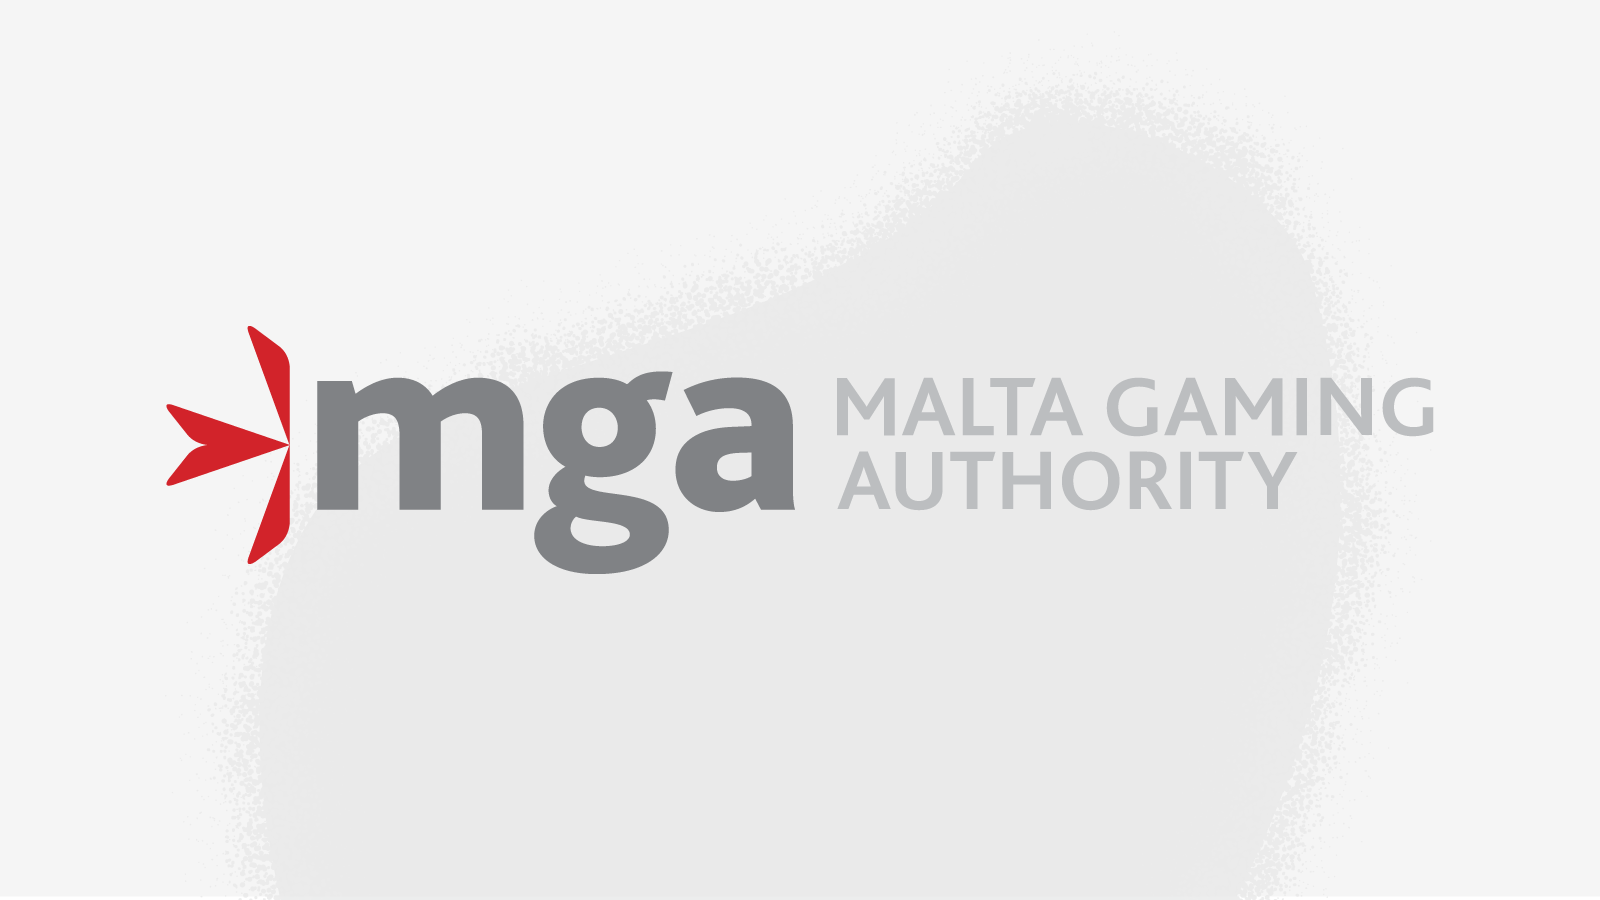 The Malta Gaming Authority in Ireland